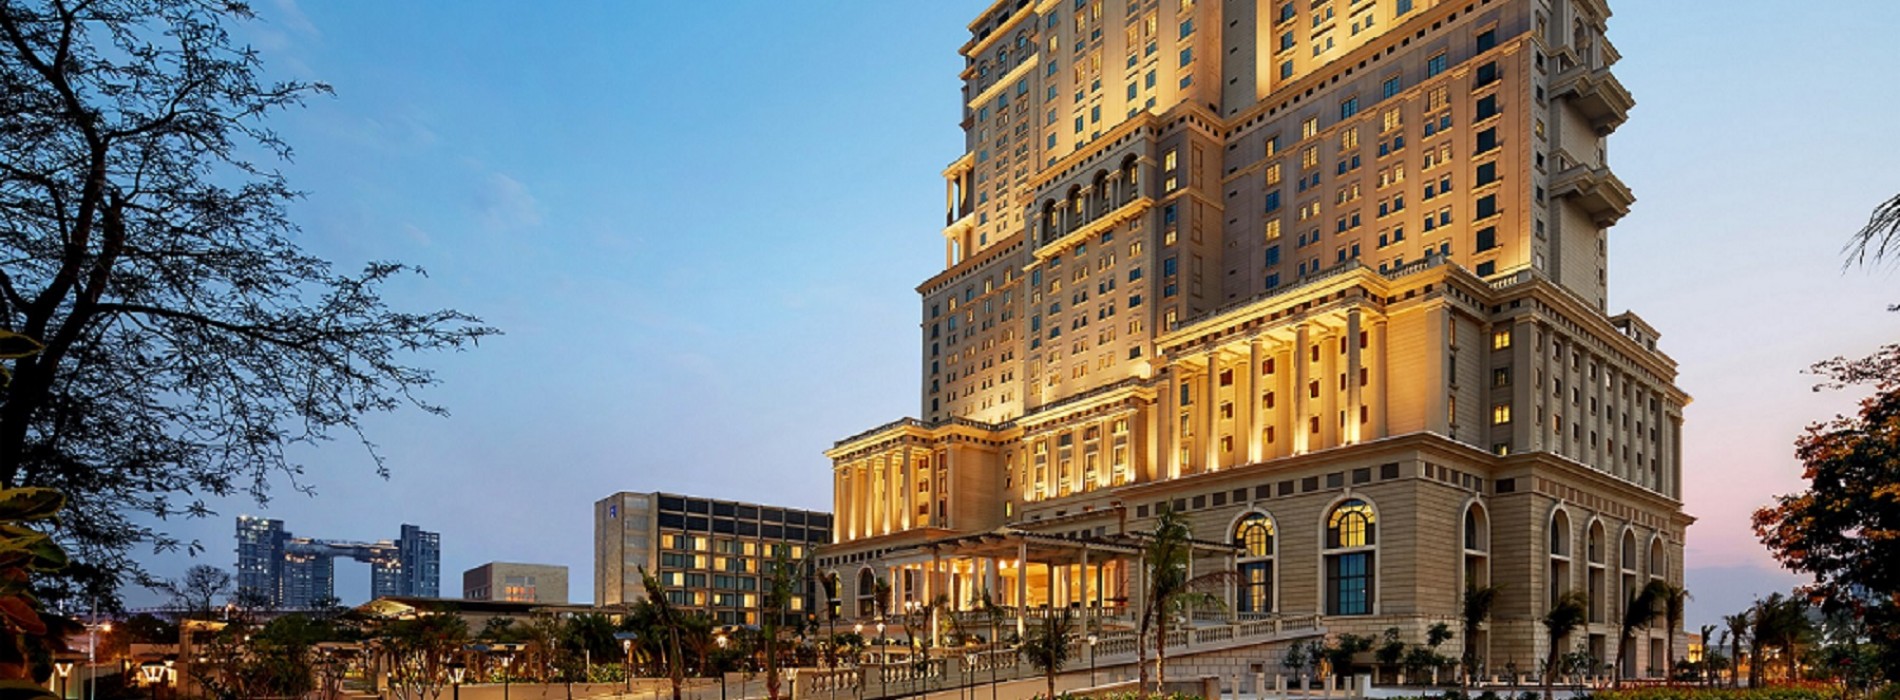 ITC Announces the Launch of Super Premium Luxury Hotel ITC Royal Bengal